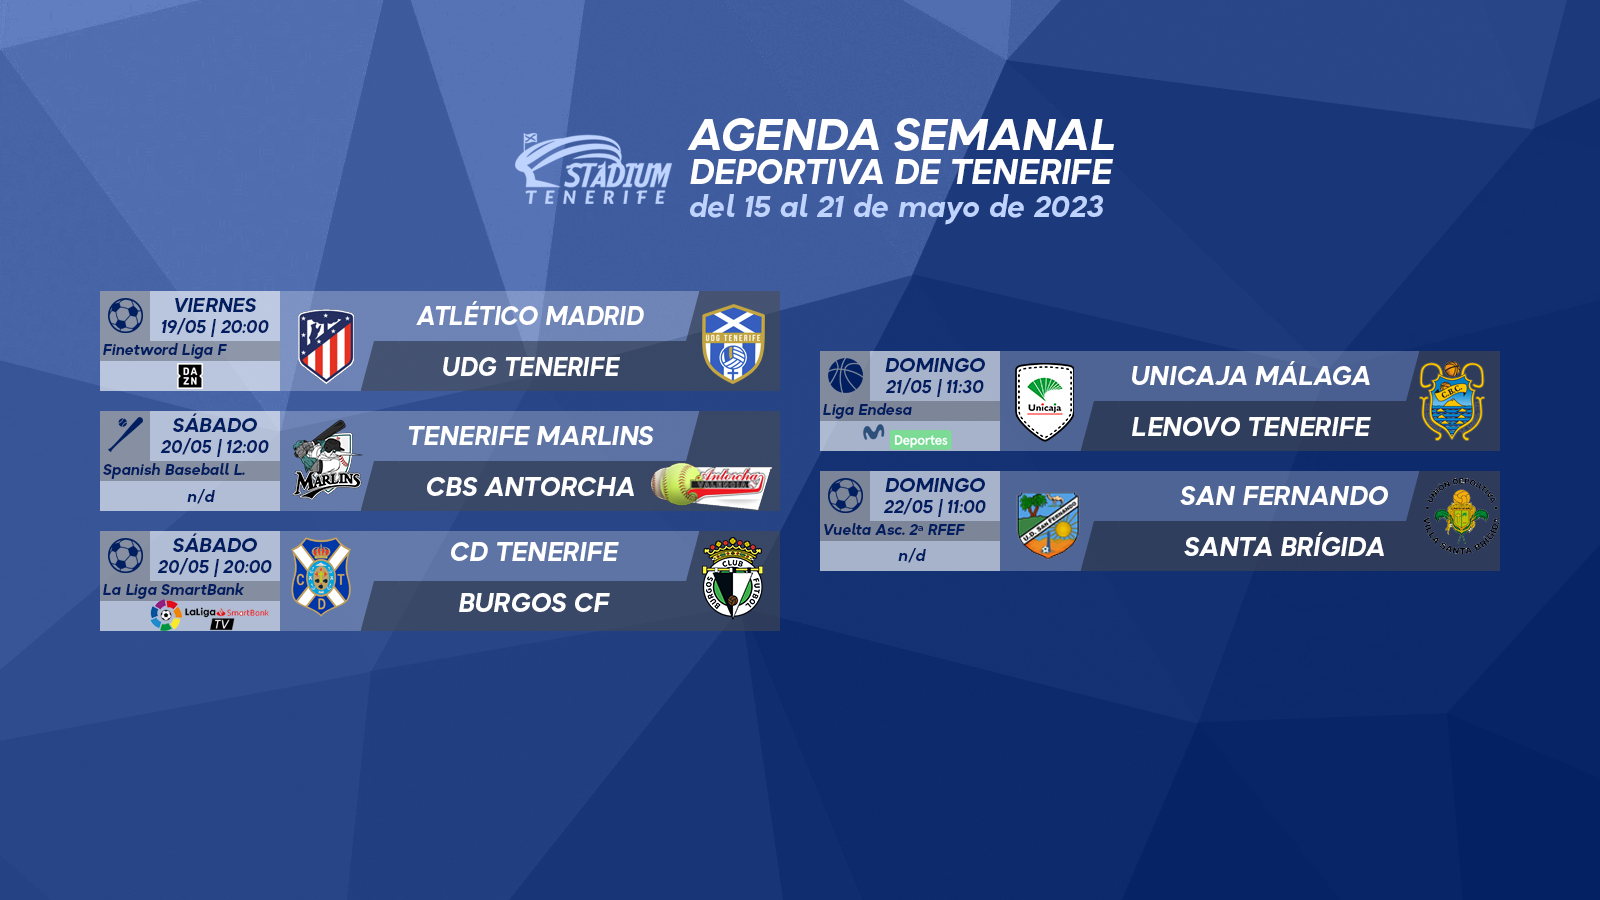 Agenda Semanal Deportiva de Tenerife (15 al 21 de mayo)